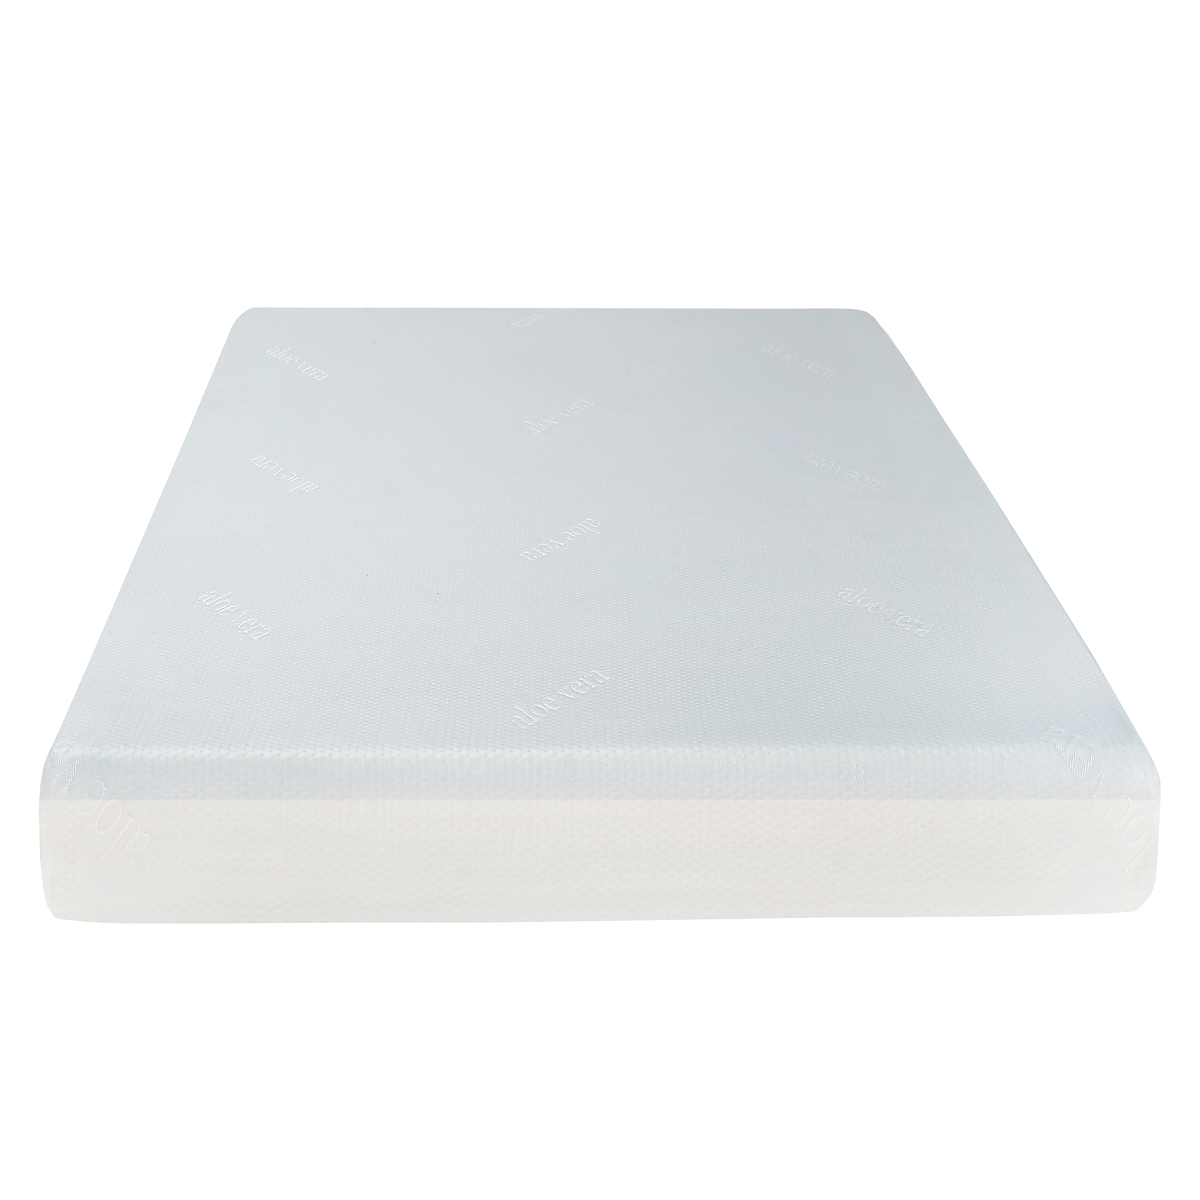 Picture of Primo International 29913 6 in. Doze Gel Memory Foam Mattress in a Box, White - Twin Size